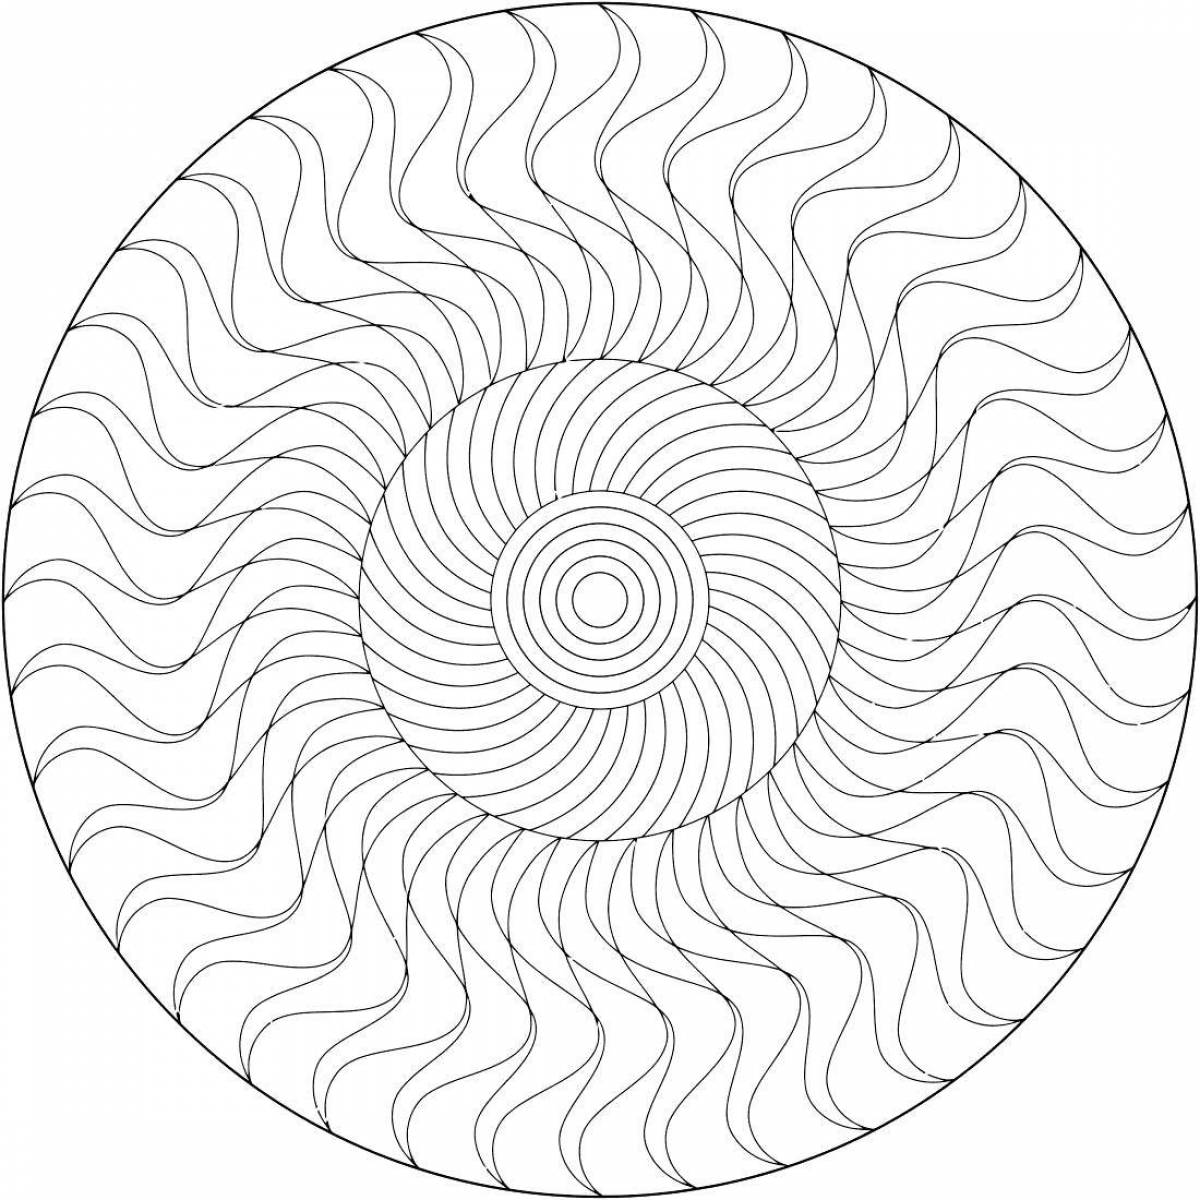 Nice spiral coloring